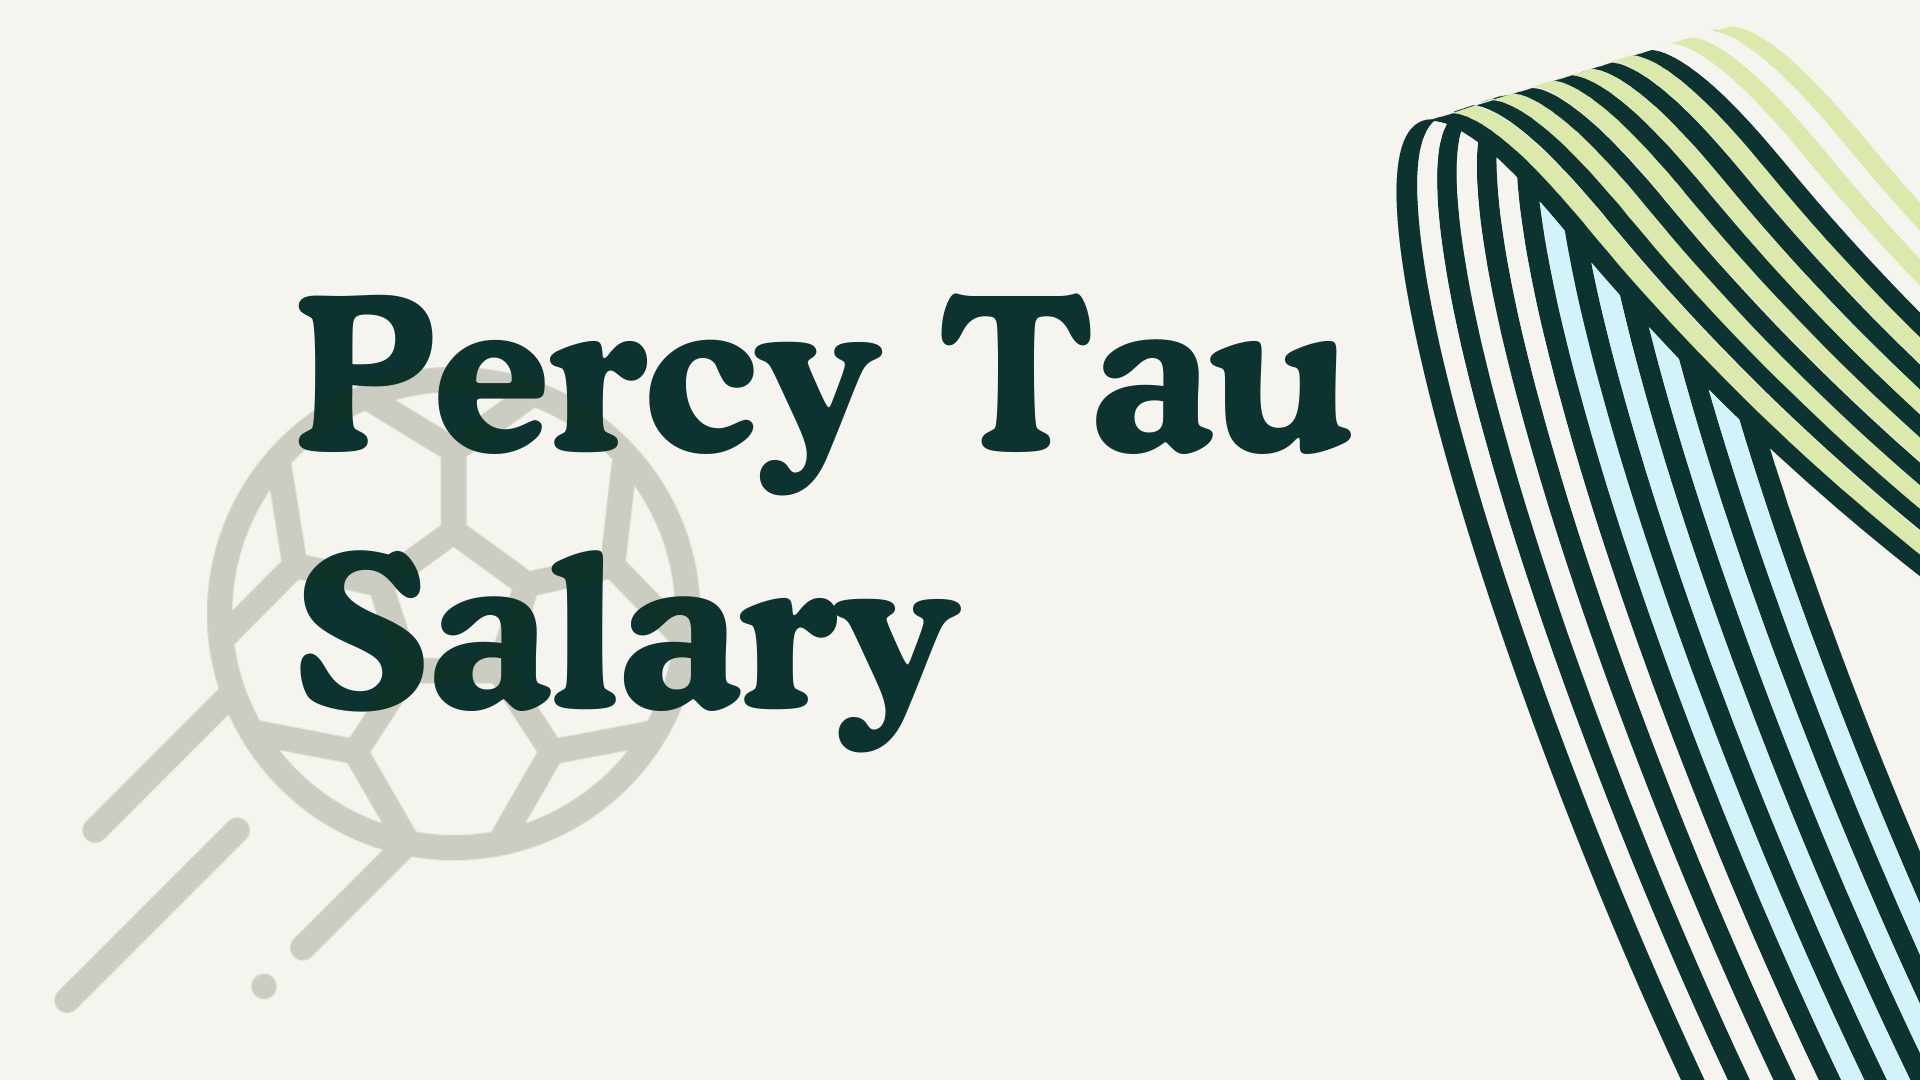 Percy Tau Salary